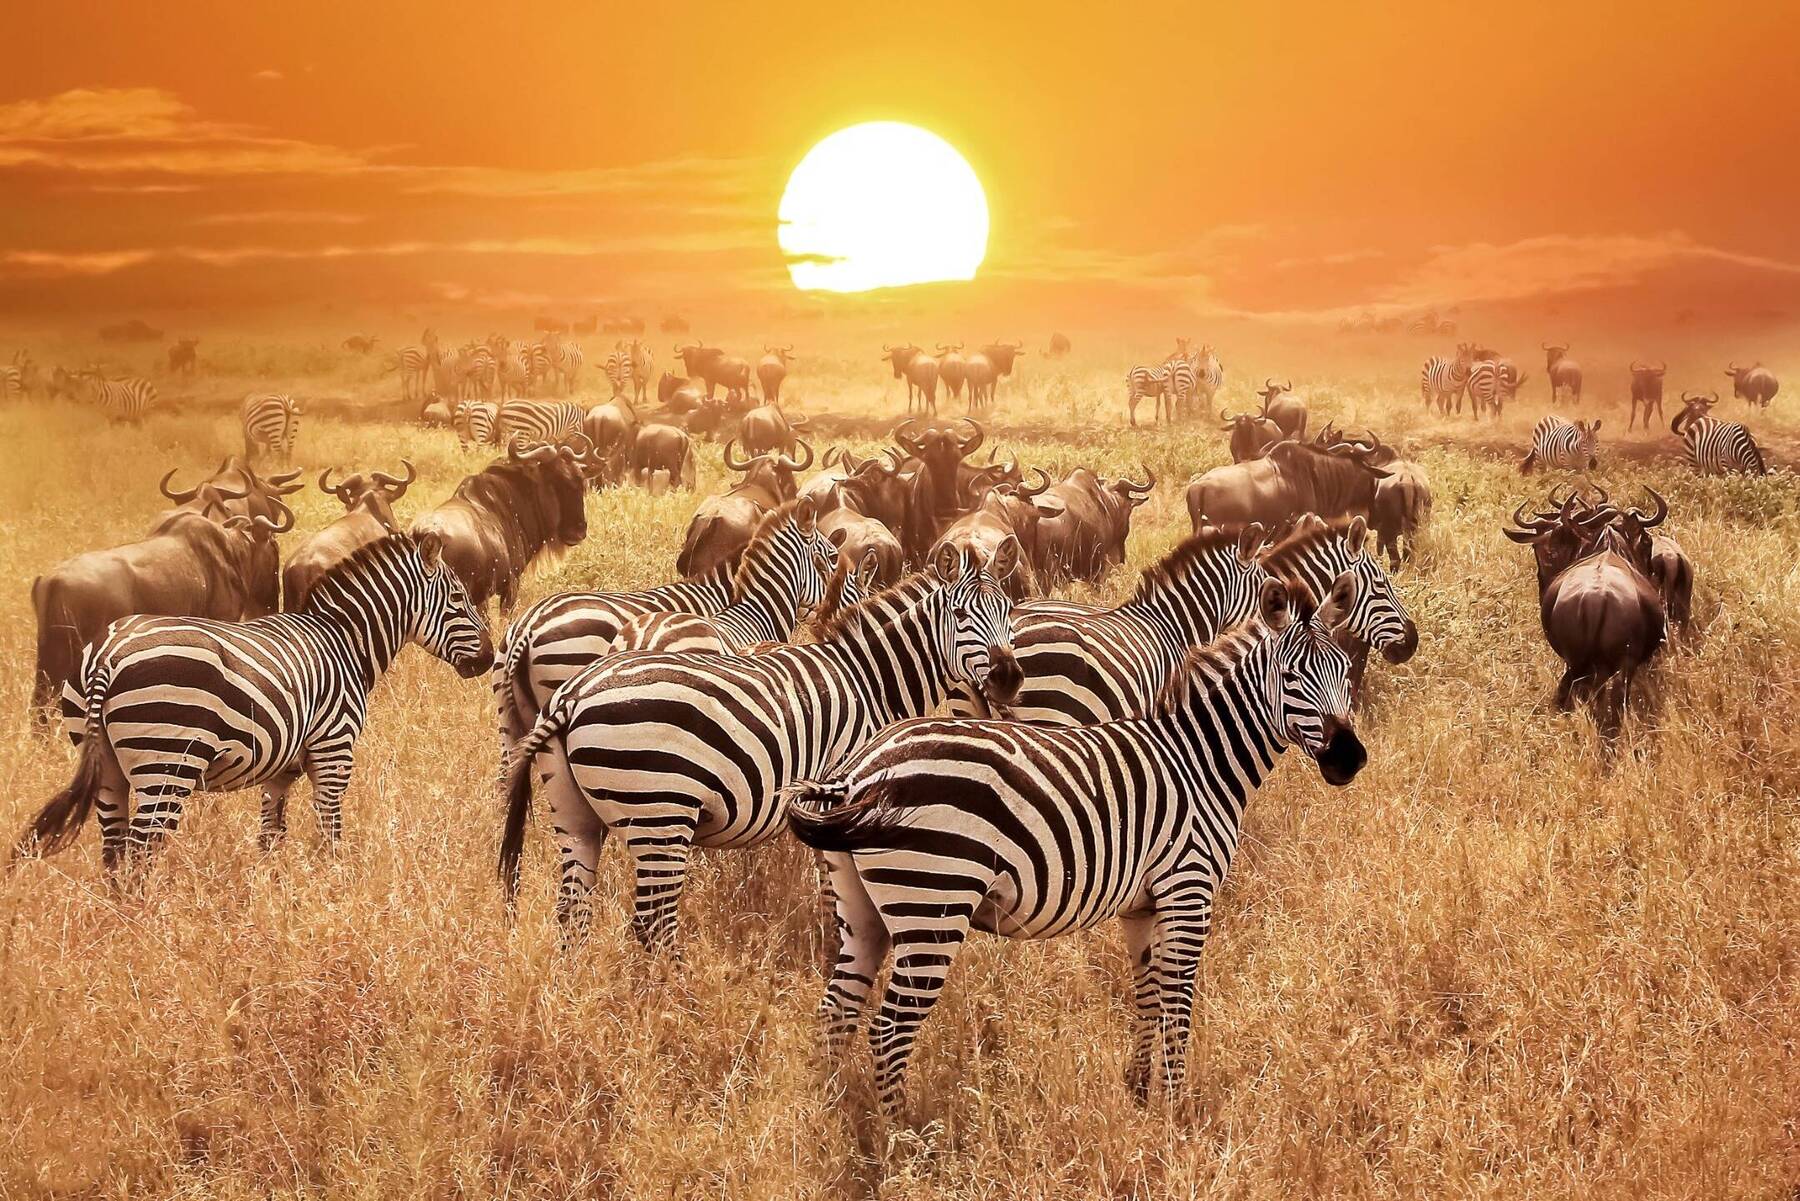 Safari in Style in the Serengeti National Park